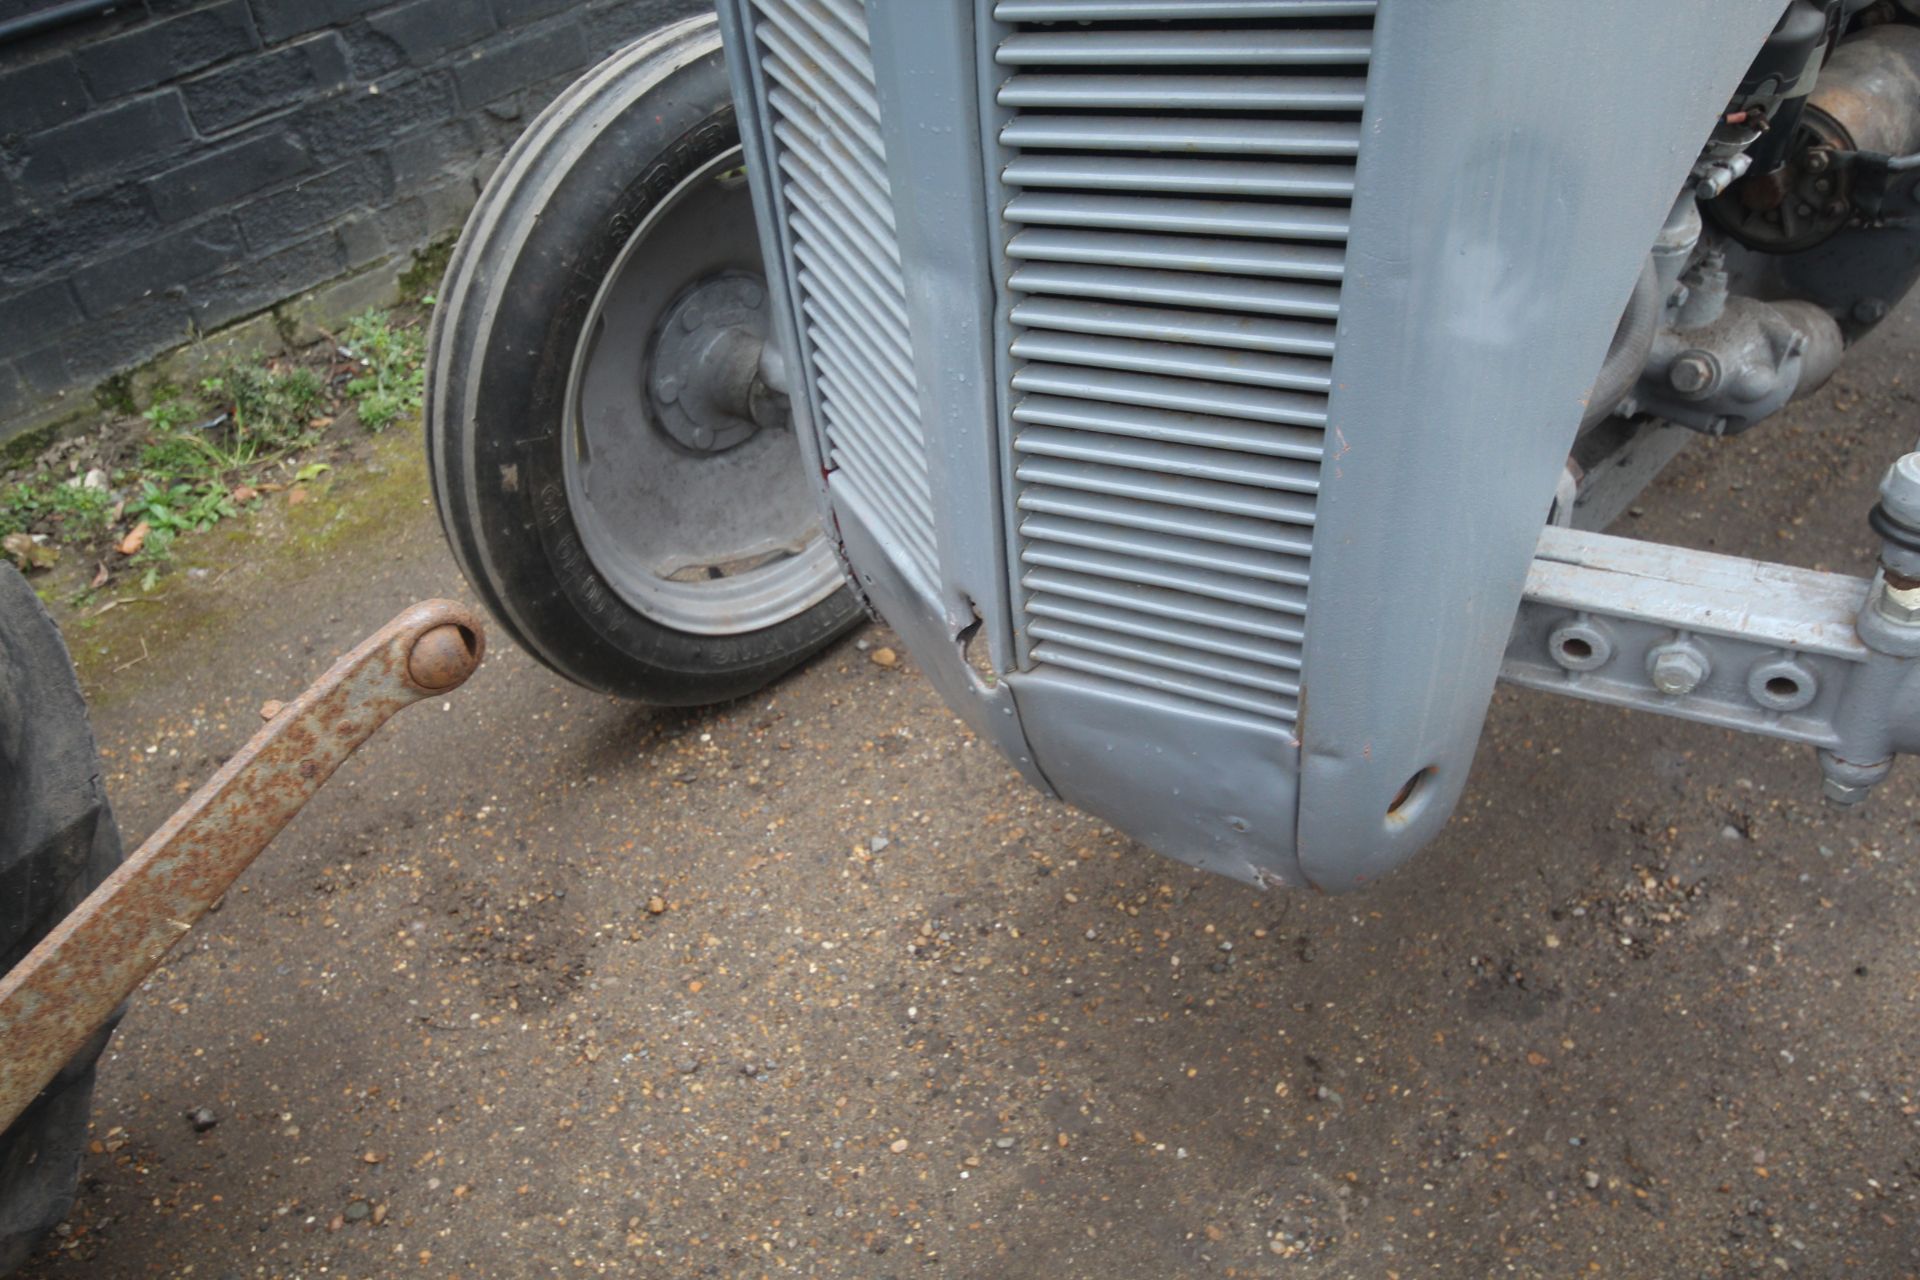 Ferguson TEA 20 Petrol 2WD tractor. Registration 771 XUN. 1948. Serial number 57289. 11.2-28 rear - Image 6 of 44